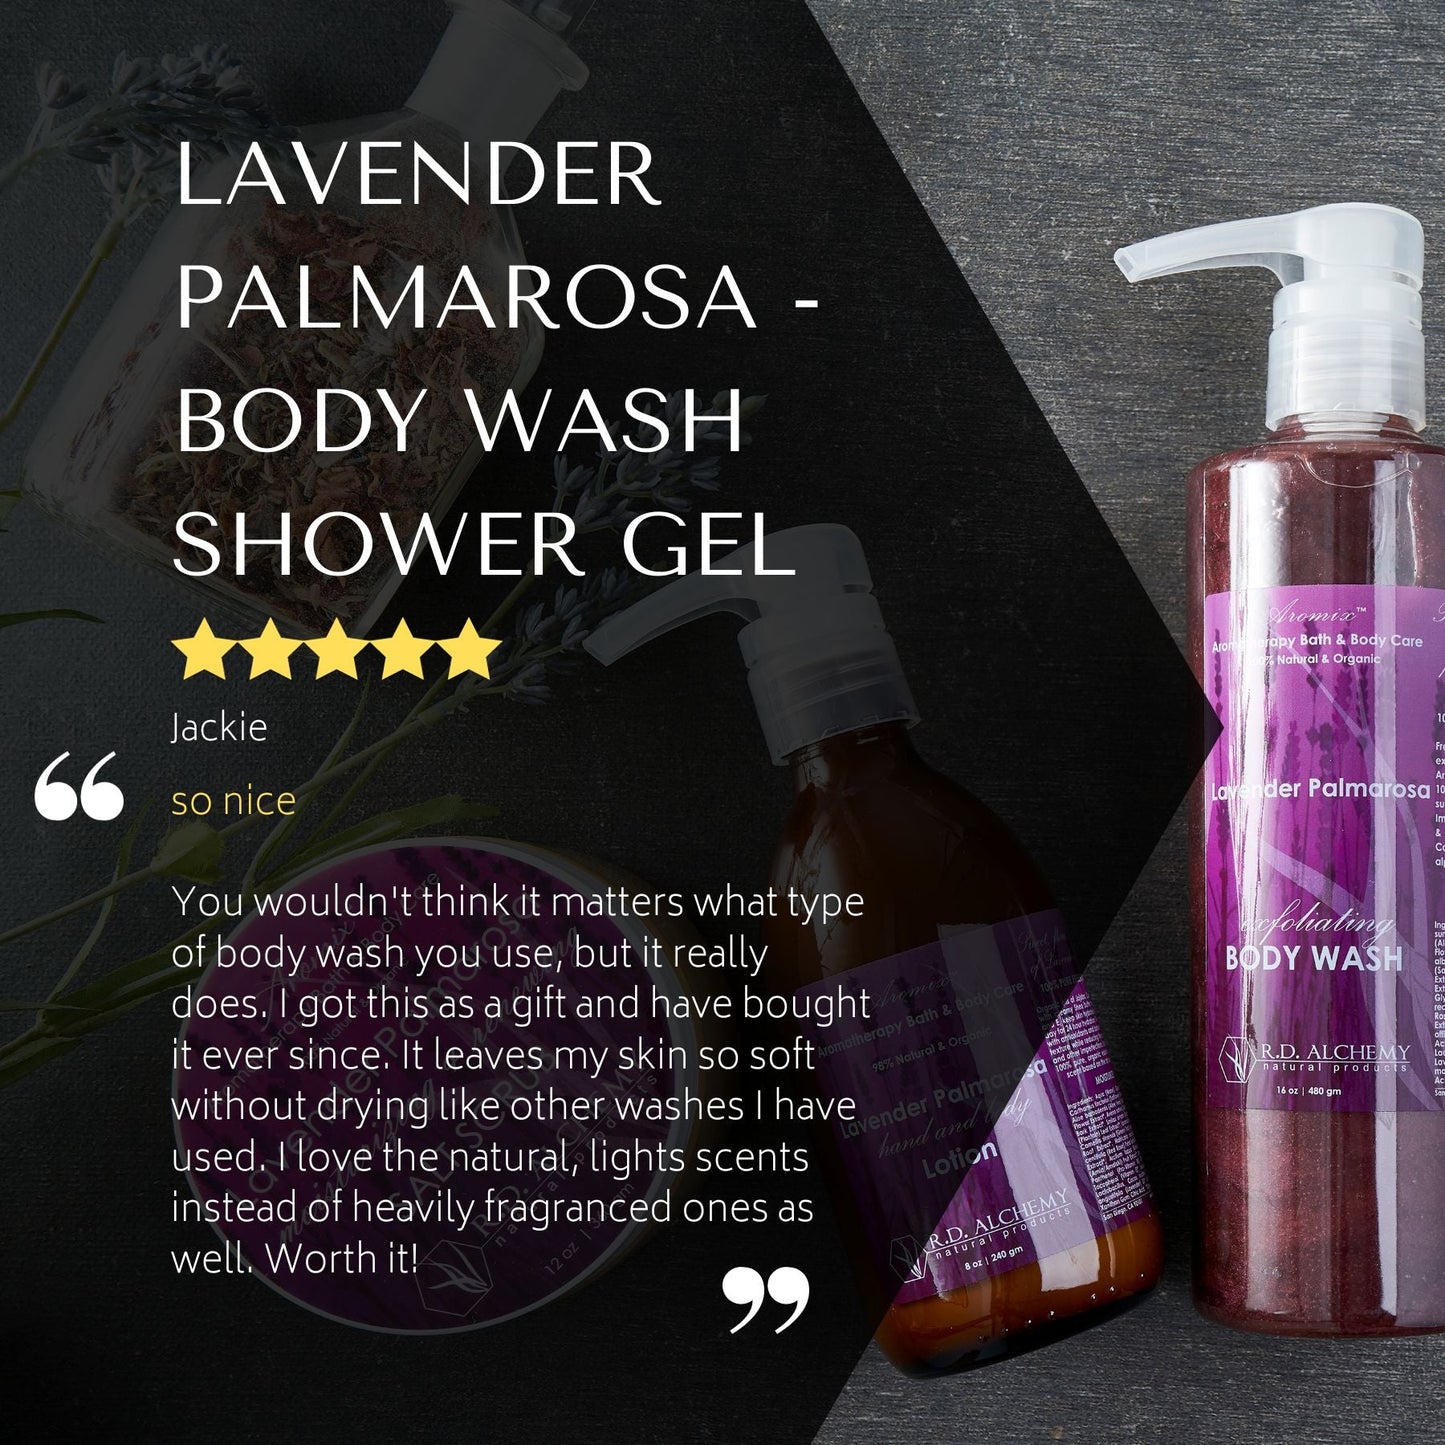 Lavender Palmarosa Body Wash Shower Gel